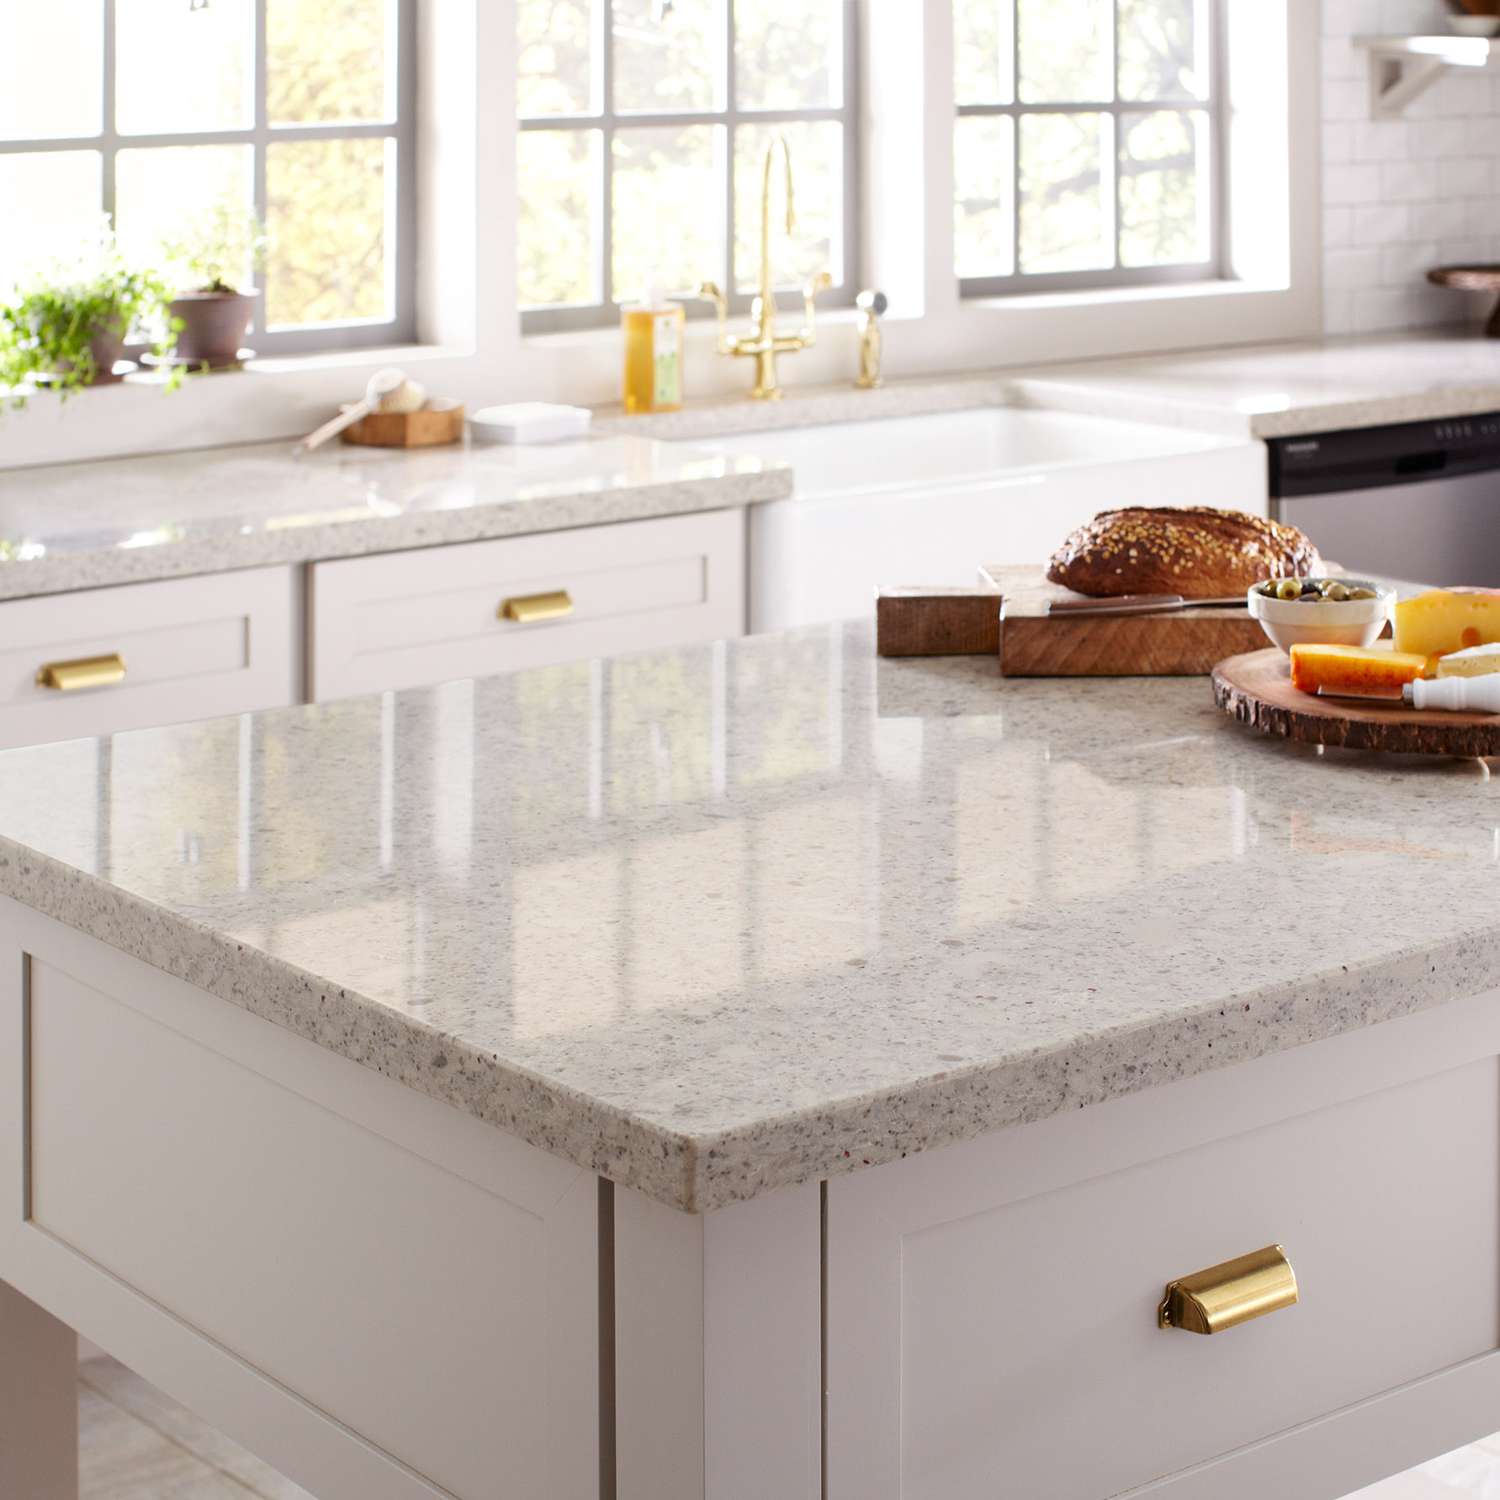 How To Choose Between Quartz Or Granite Kitchen Countertops Martha Stewart,Strawberry Daiquiri Recipe Card